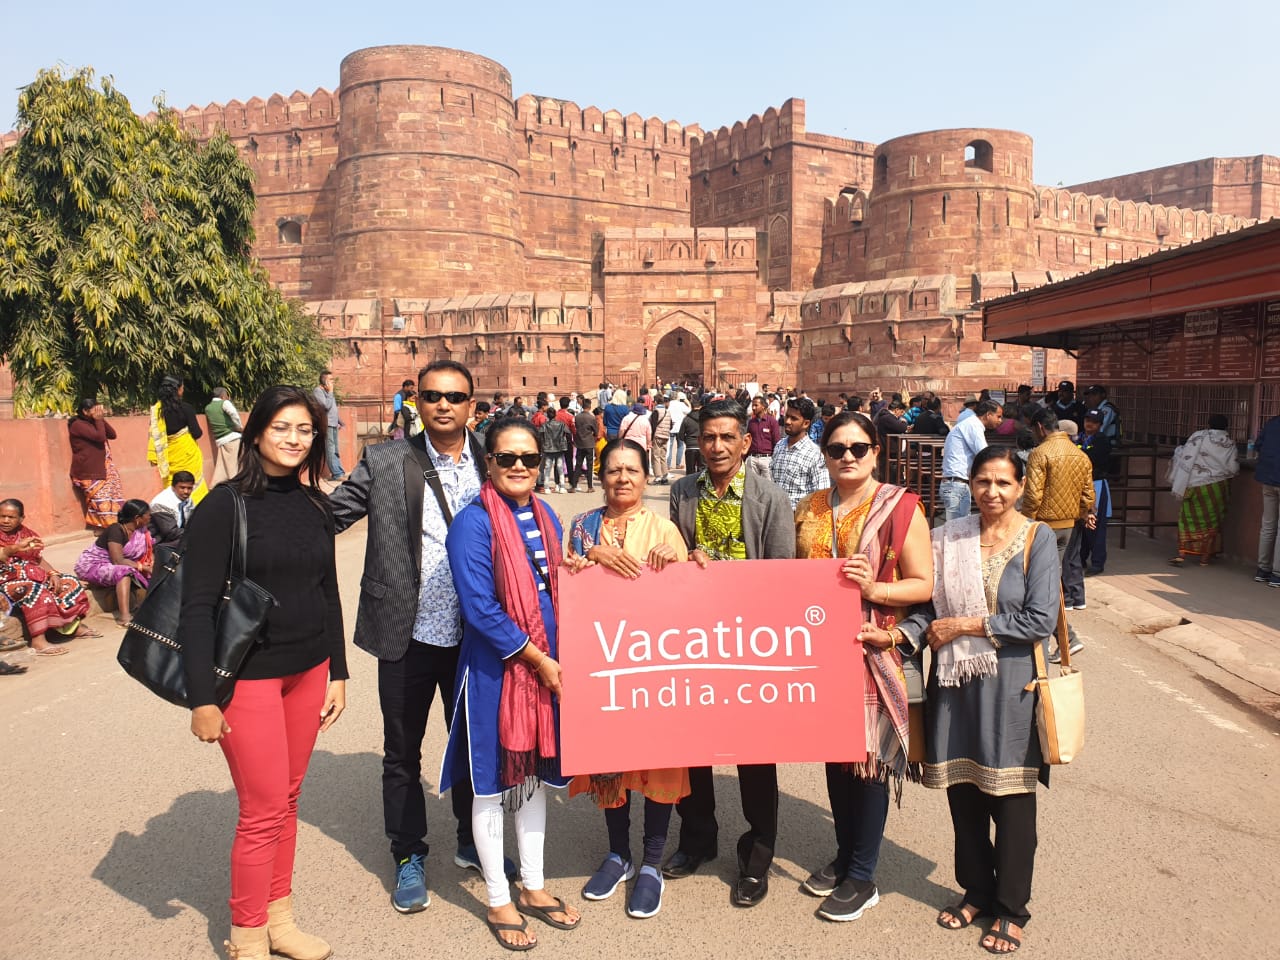 parvin kumar family from australia took india tour review vacationindia.com